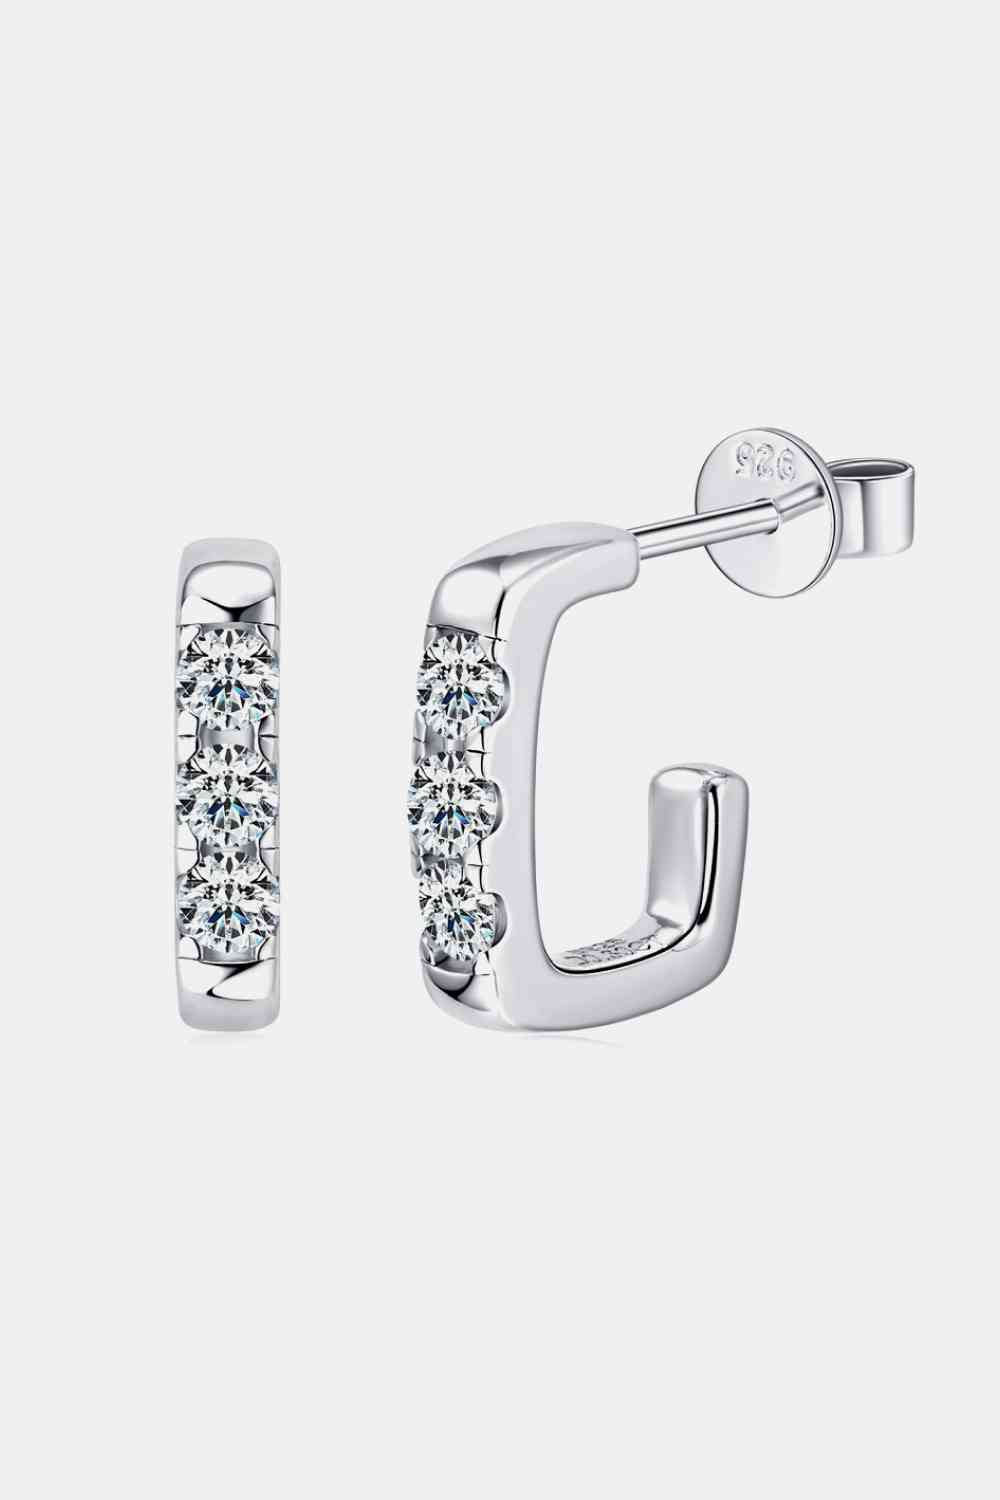 Moissanite 925 Sterling Silver Geometrical Huggie Earrings